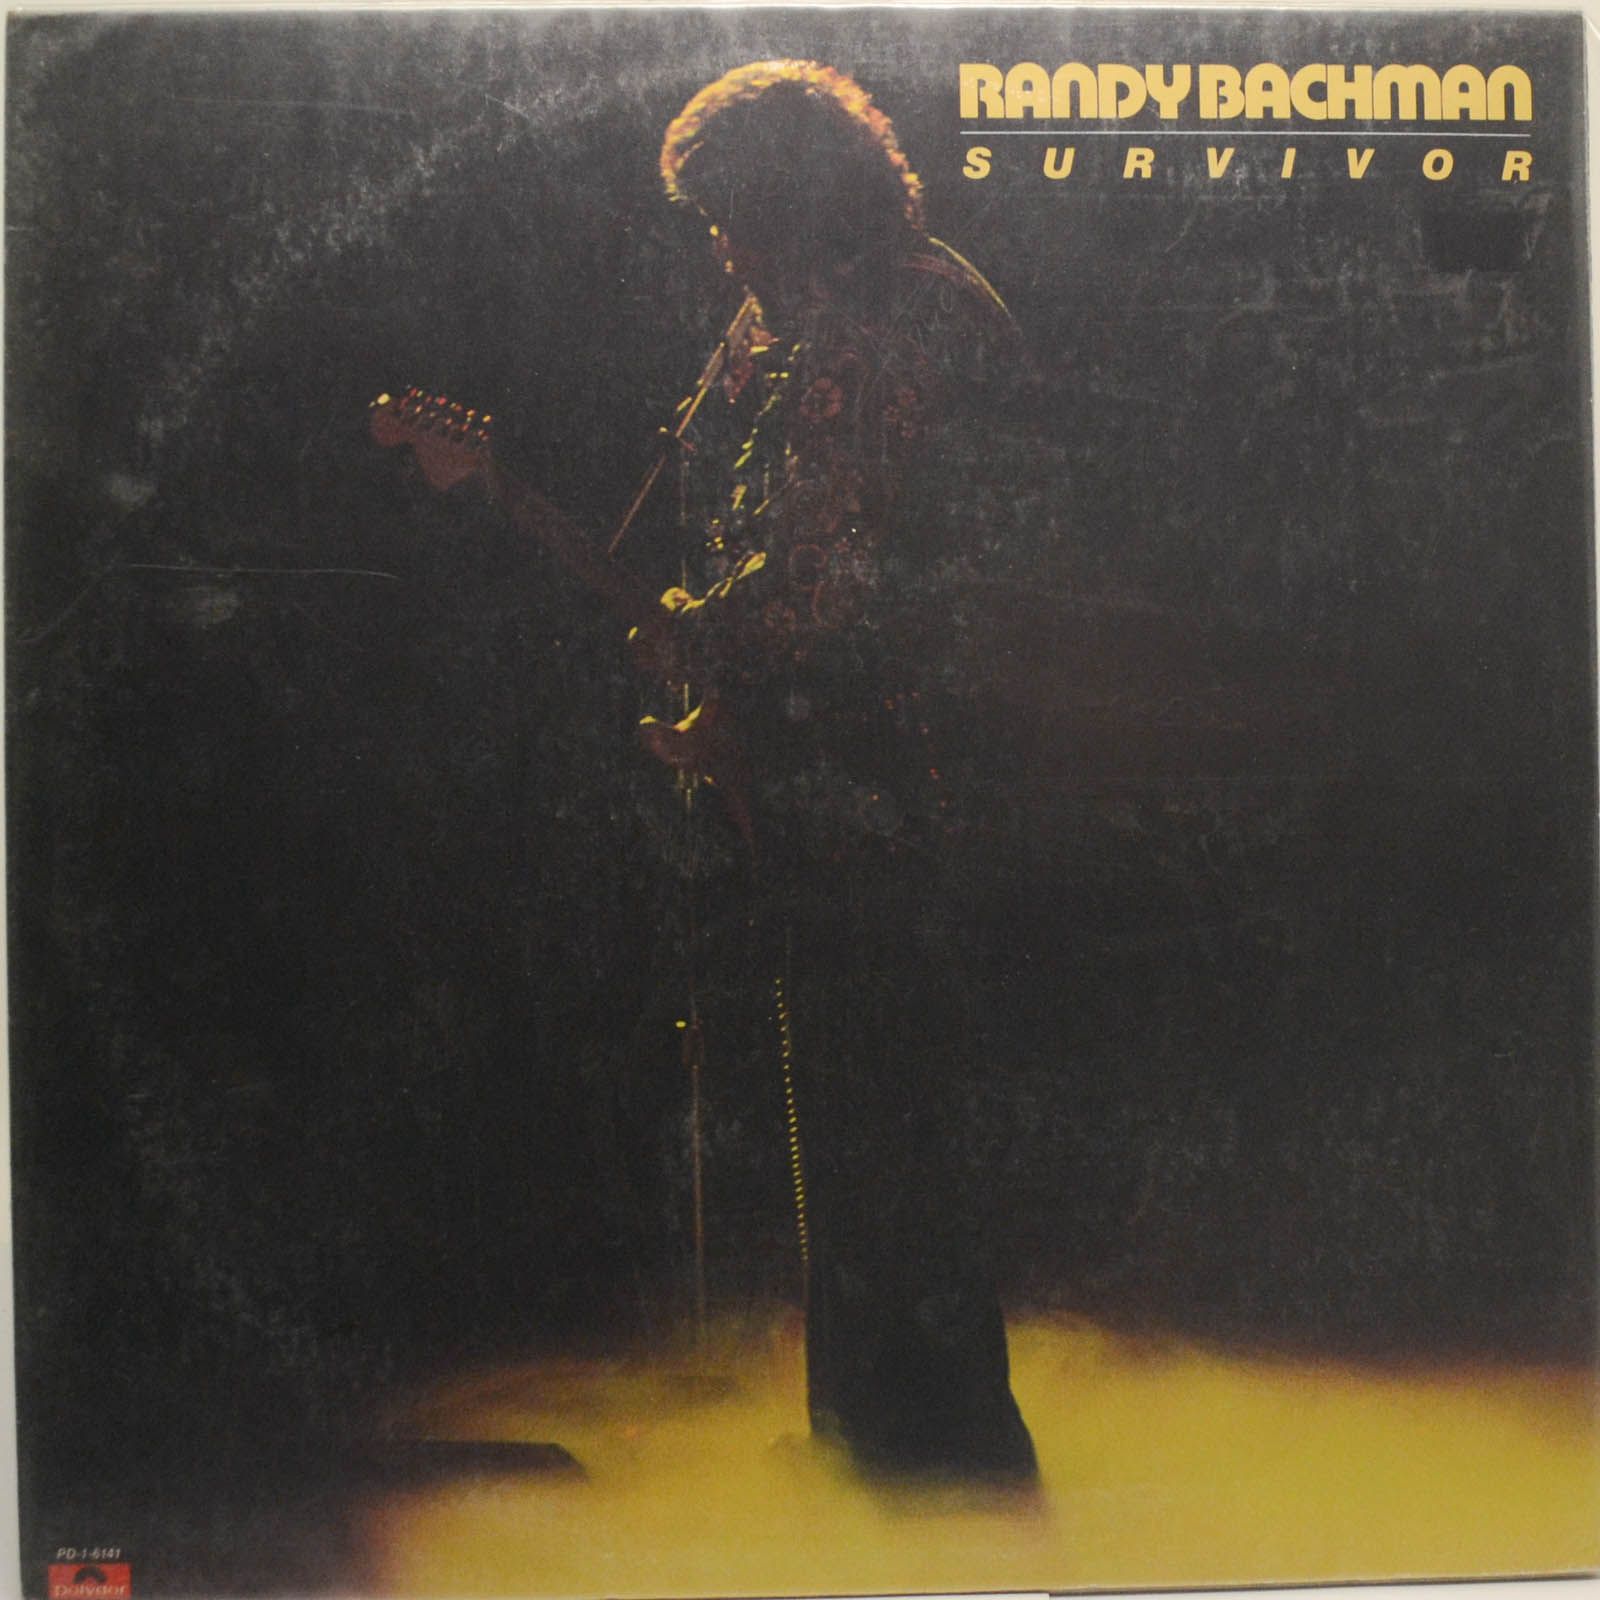 Randy Bachman — Survivor, 1978